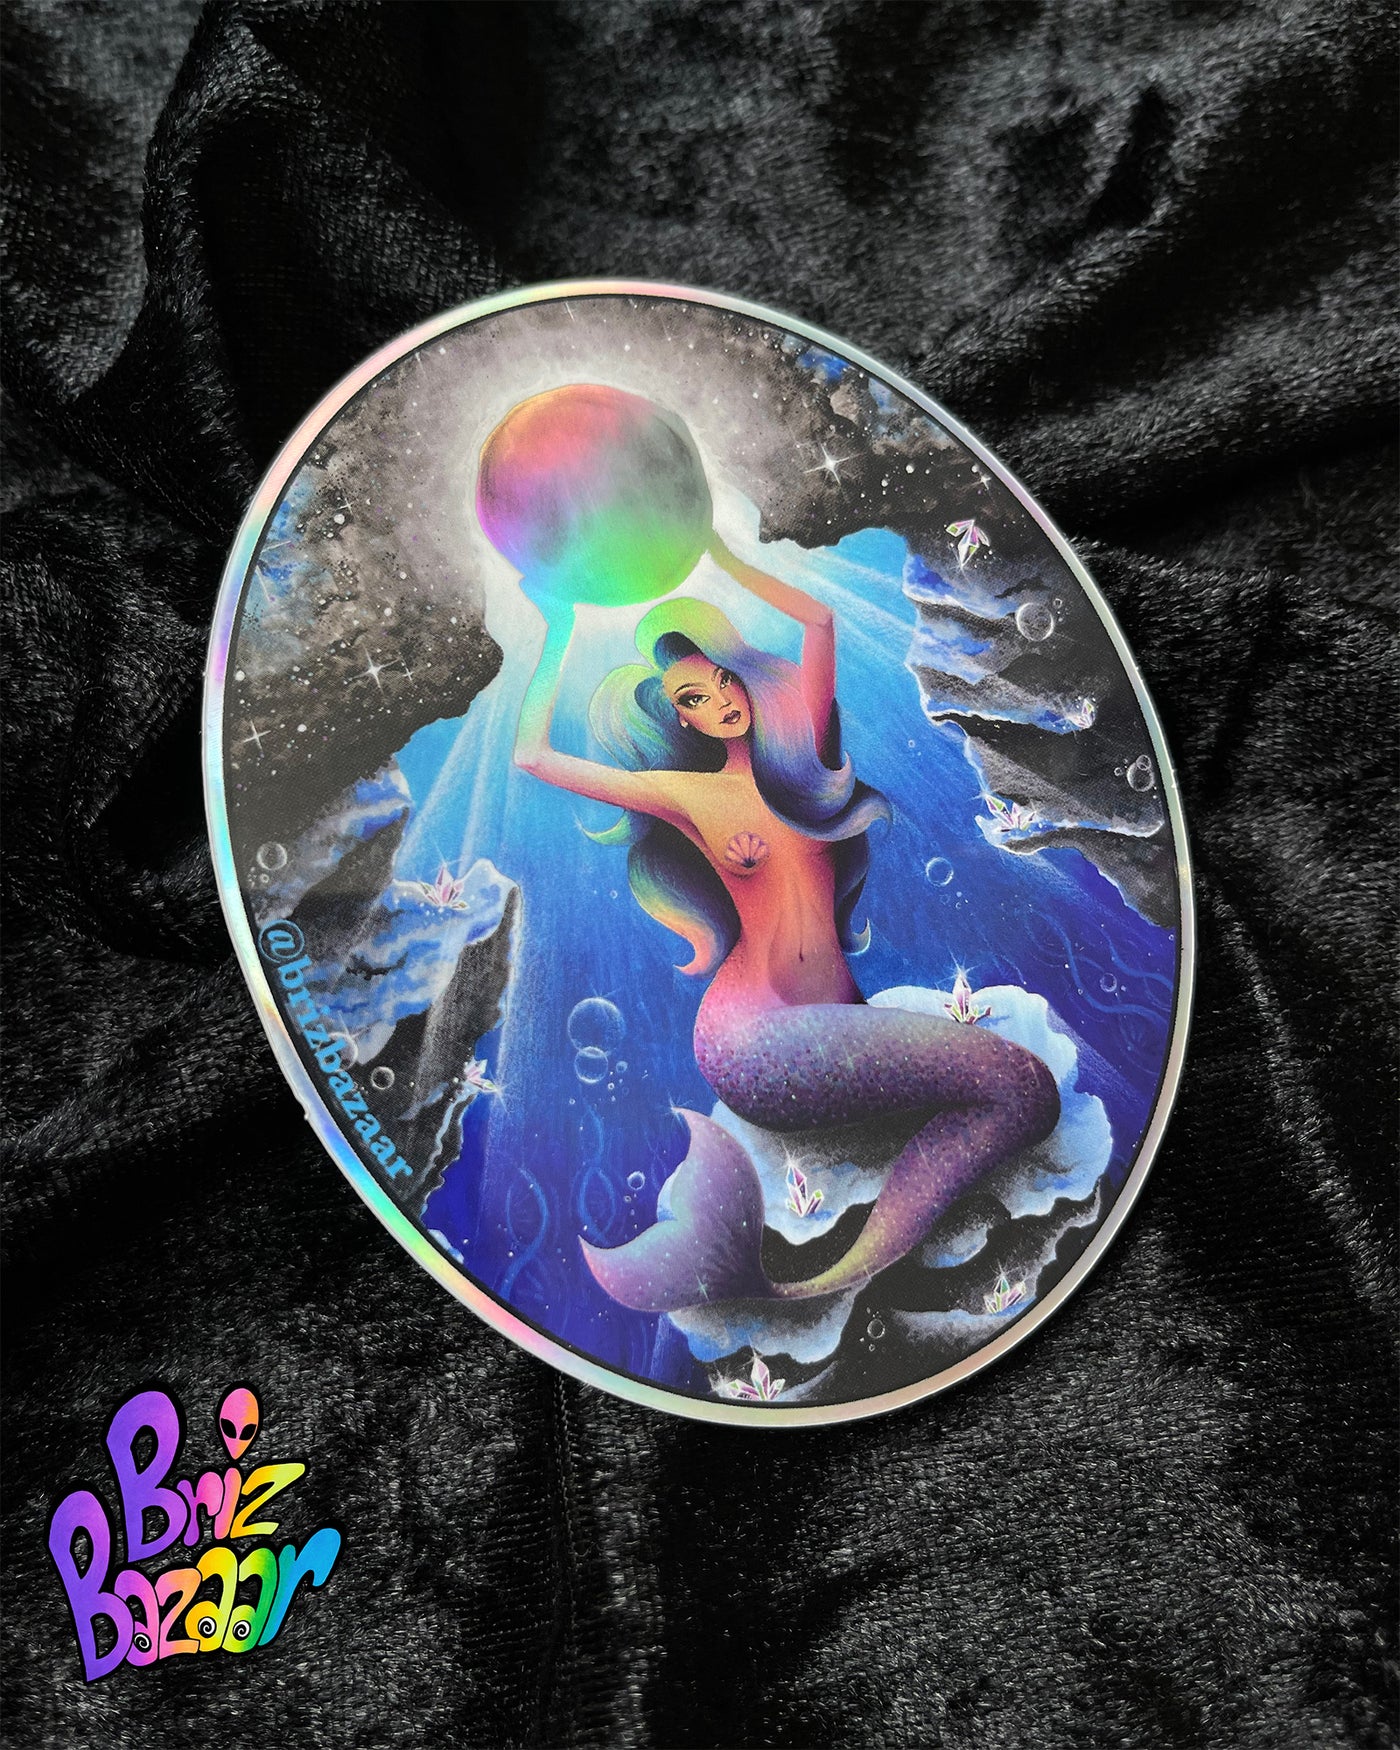 Holographic sticker of Lunar Mermaid